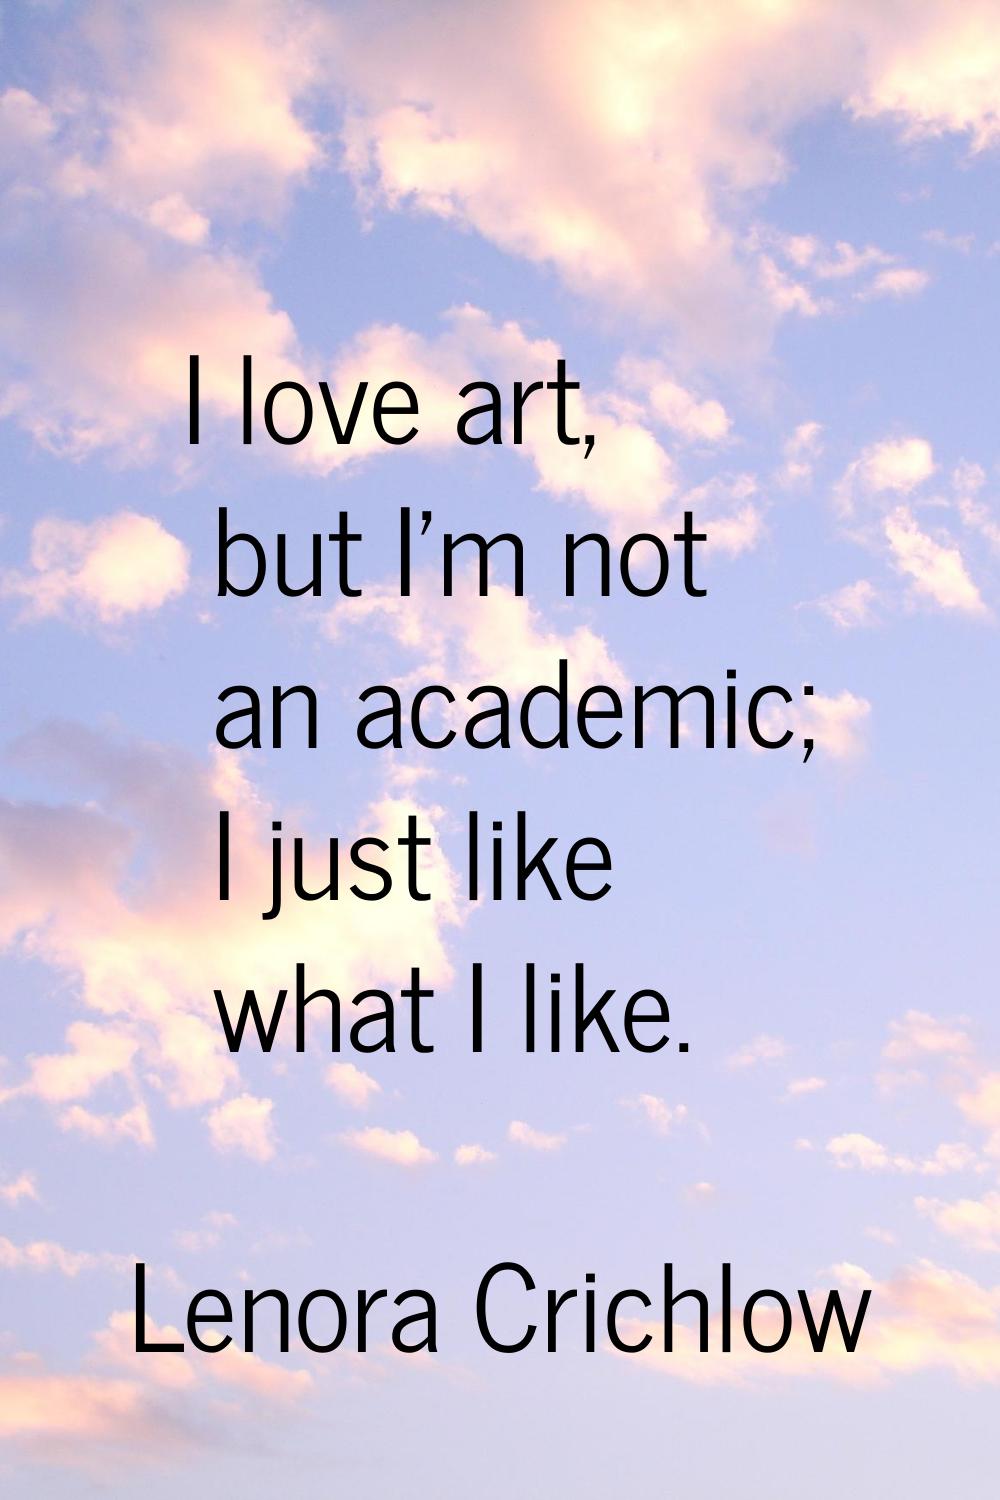 I love art, but I'm not an academic; I just like what I like.